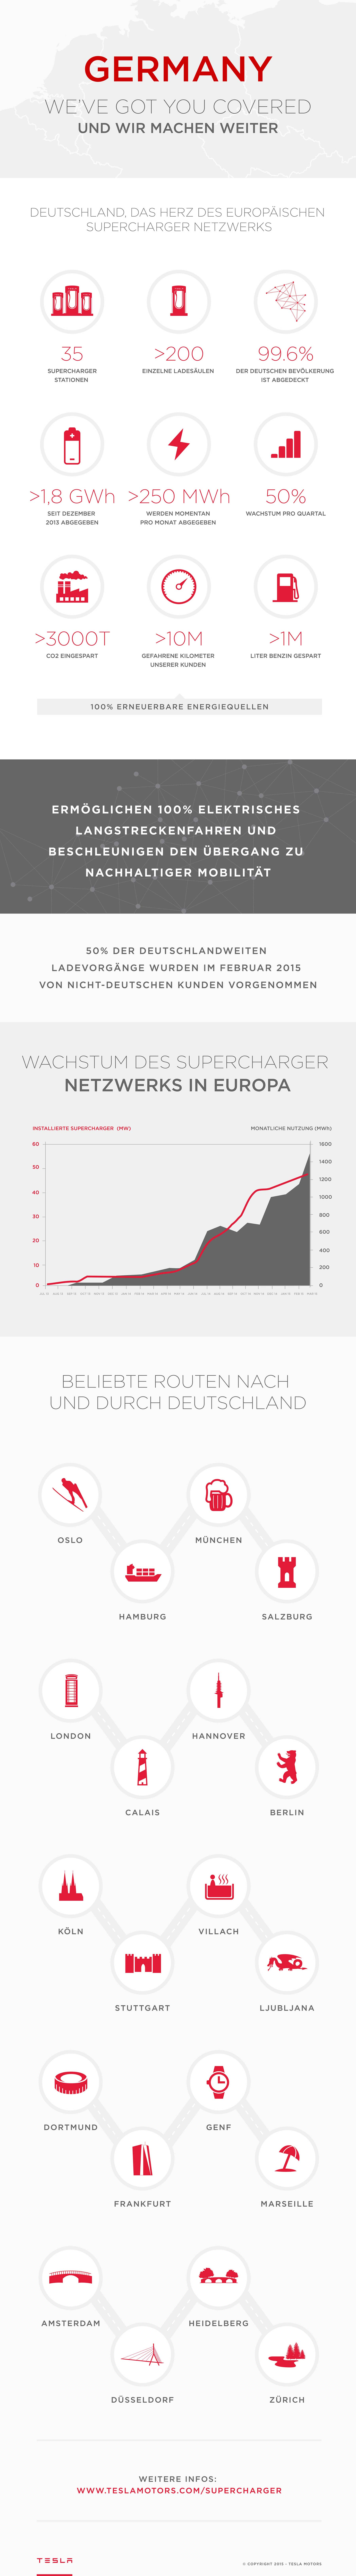 Deutschland-Supercharger-Maerz-2015-Infografik